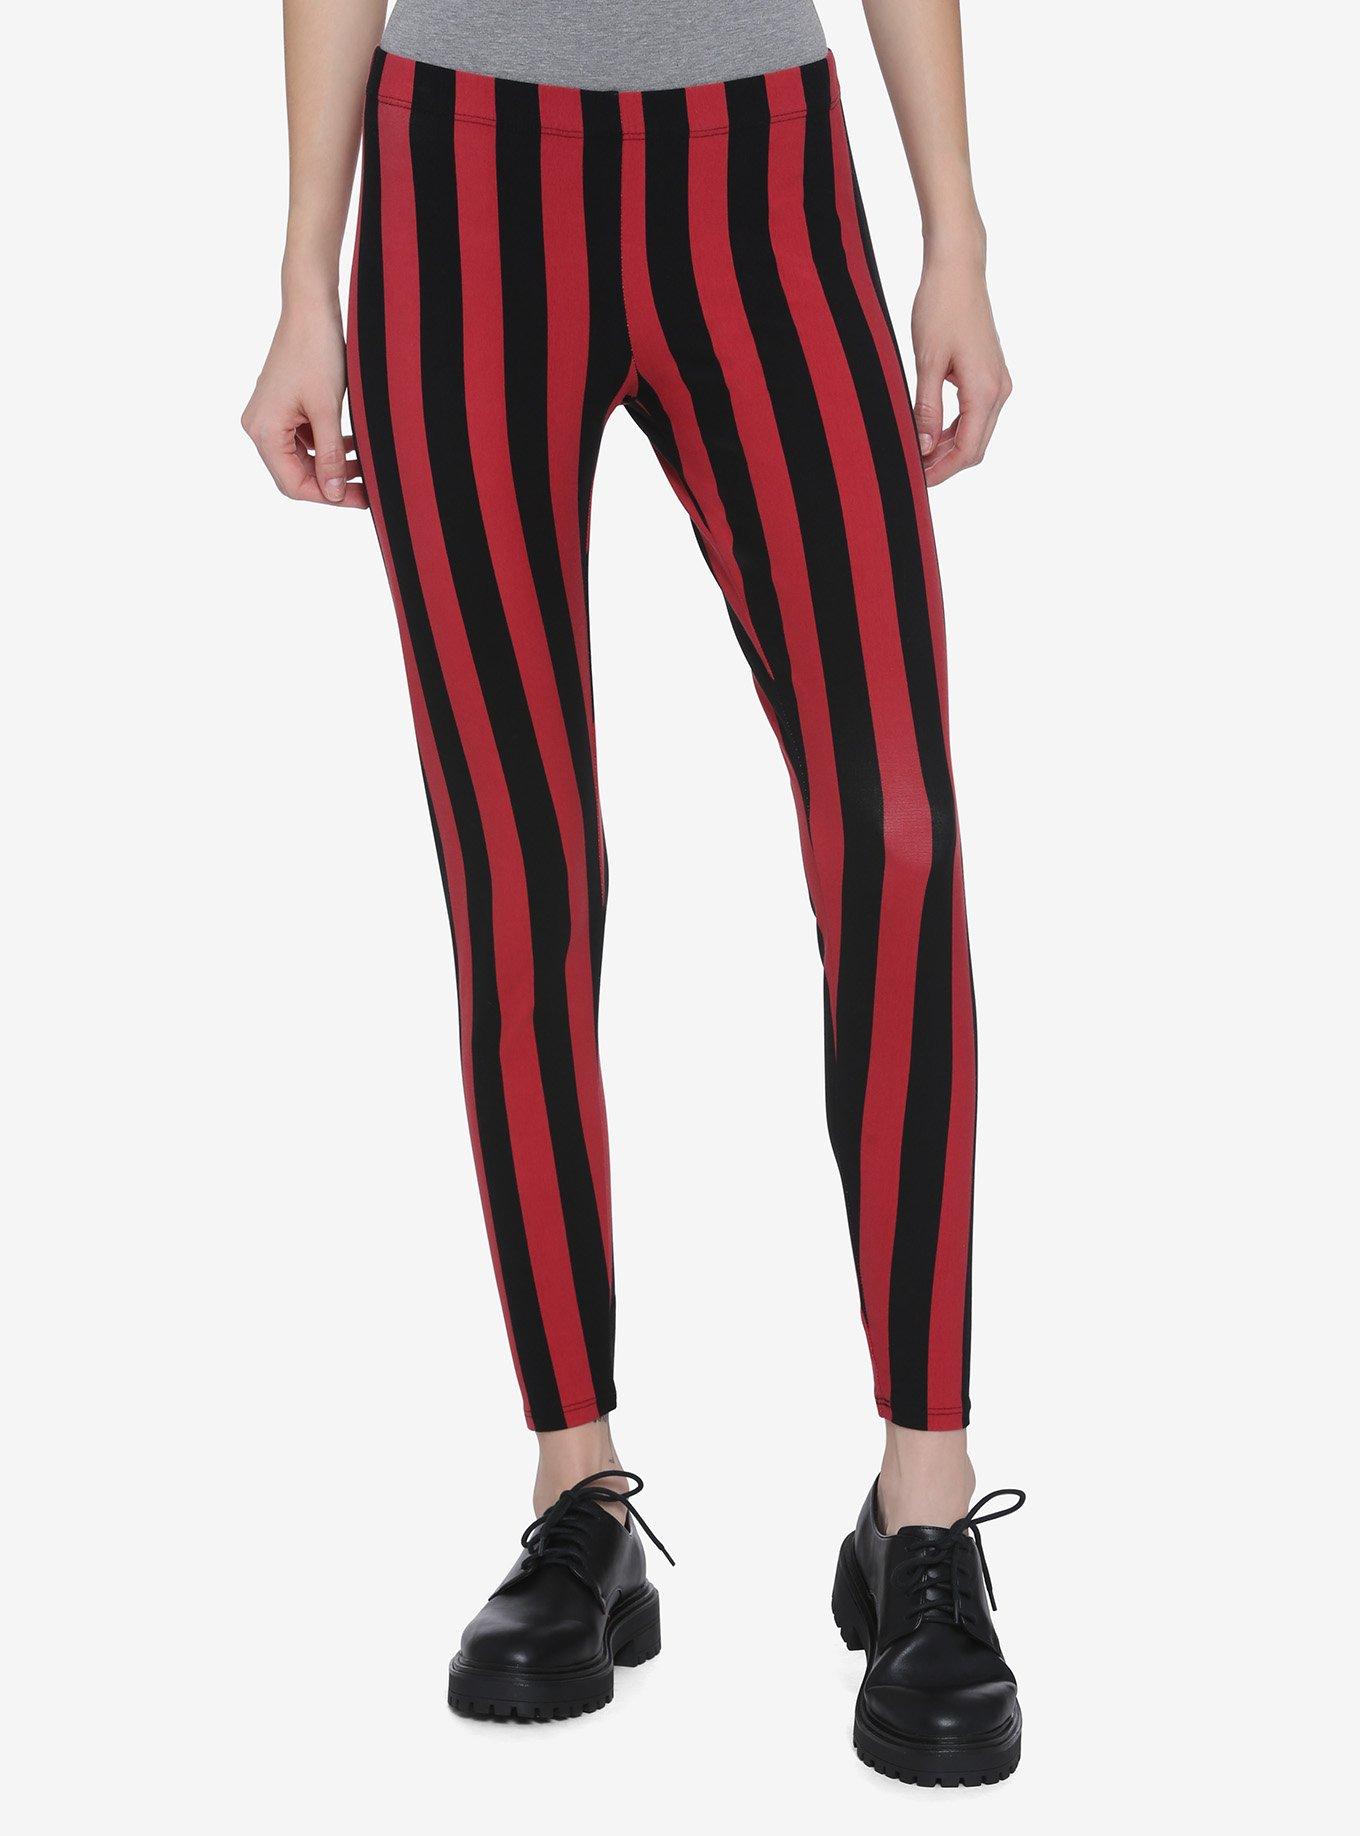 Red & Black Vertical Stripes Printed Leggings